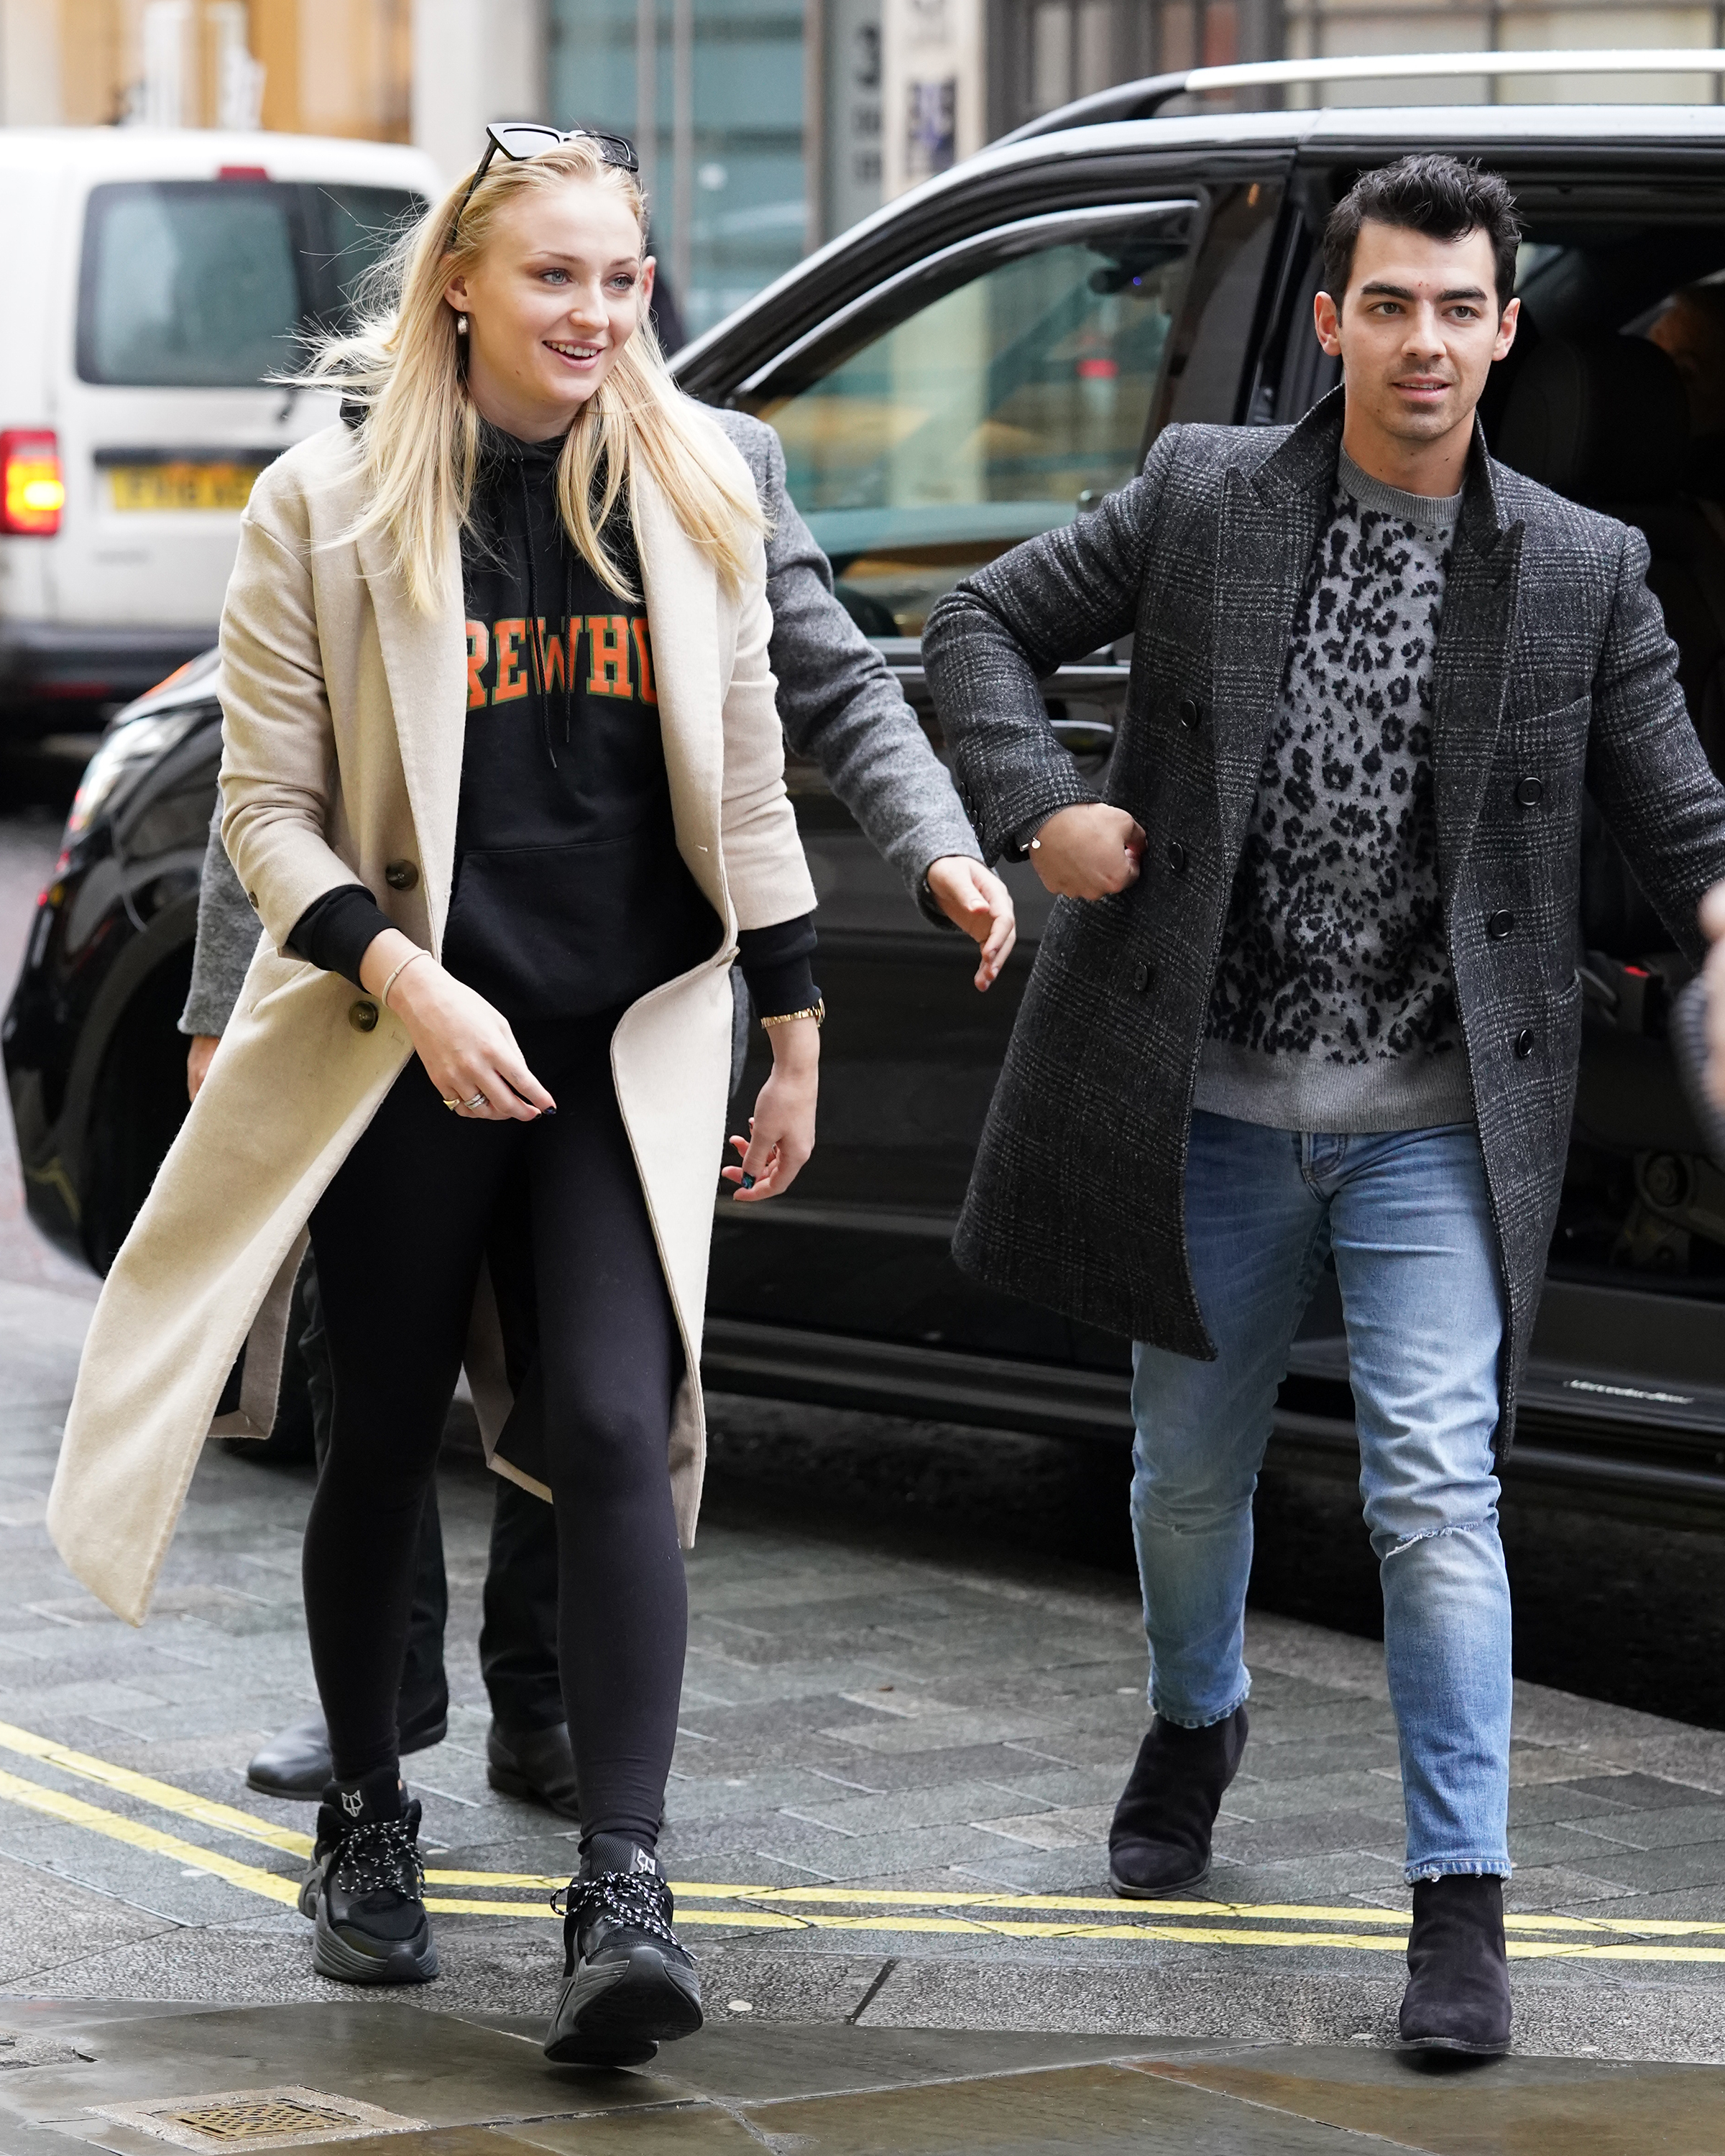 Joe Jonas and Sophie Turner walks in London, England on January 30, 2020 | Source: Getty Images